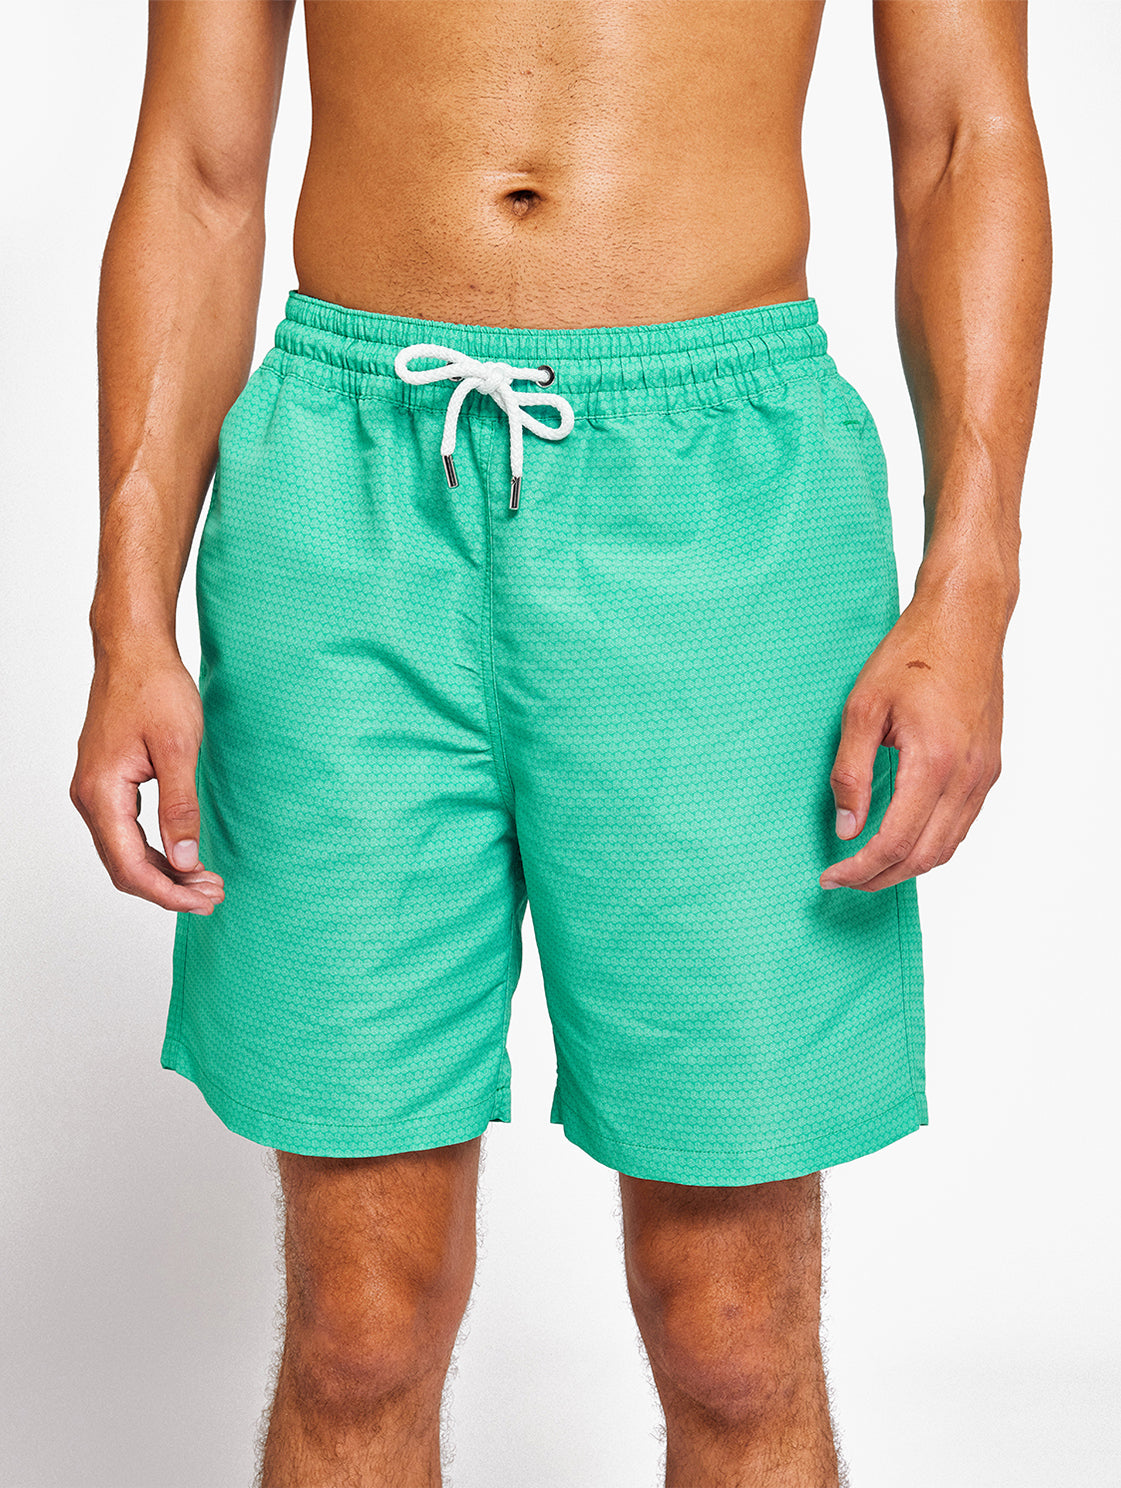 Frescobol Carioca - Angra Deco Sport Swim Shorts Pastel Orange & Vineyard Green S